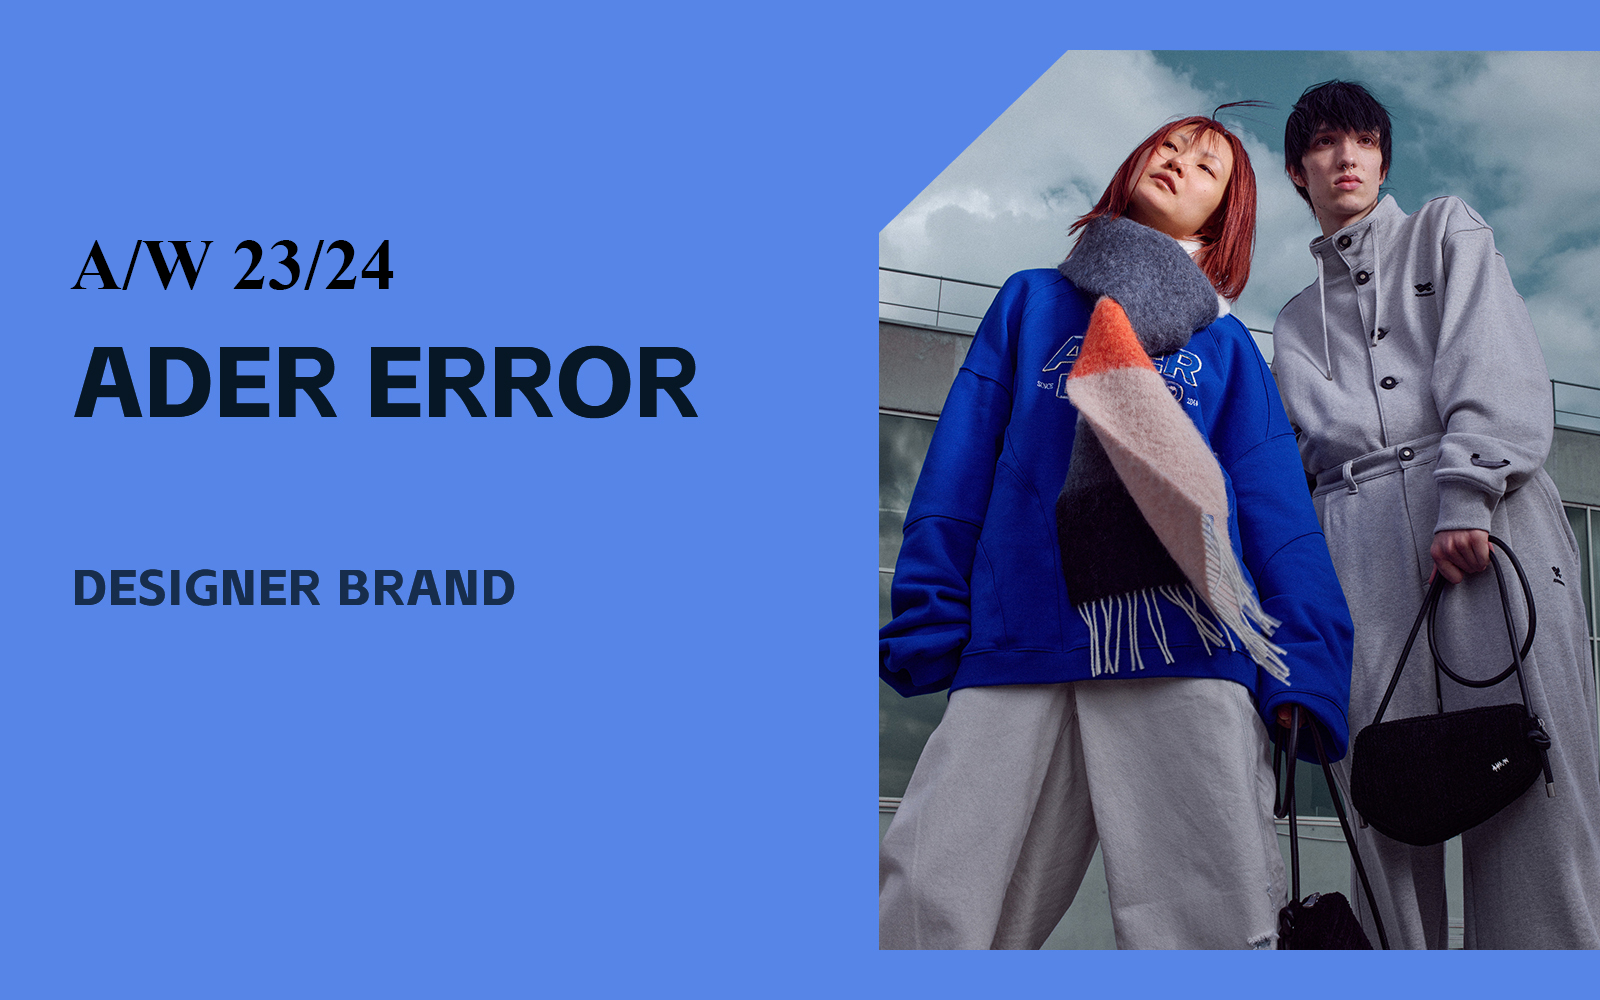 The Analysis of ADER error The Designer Brand